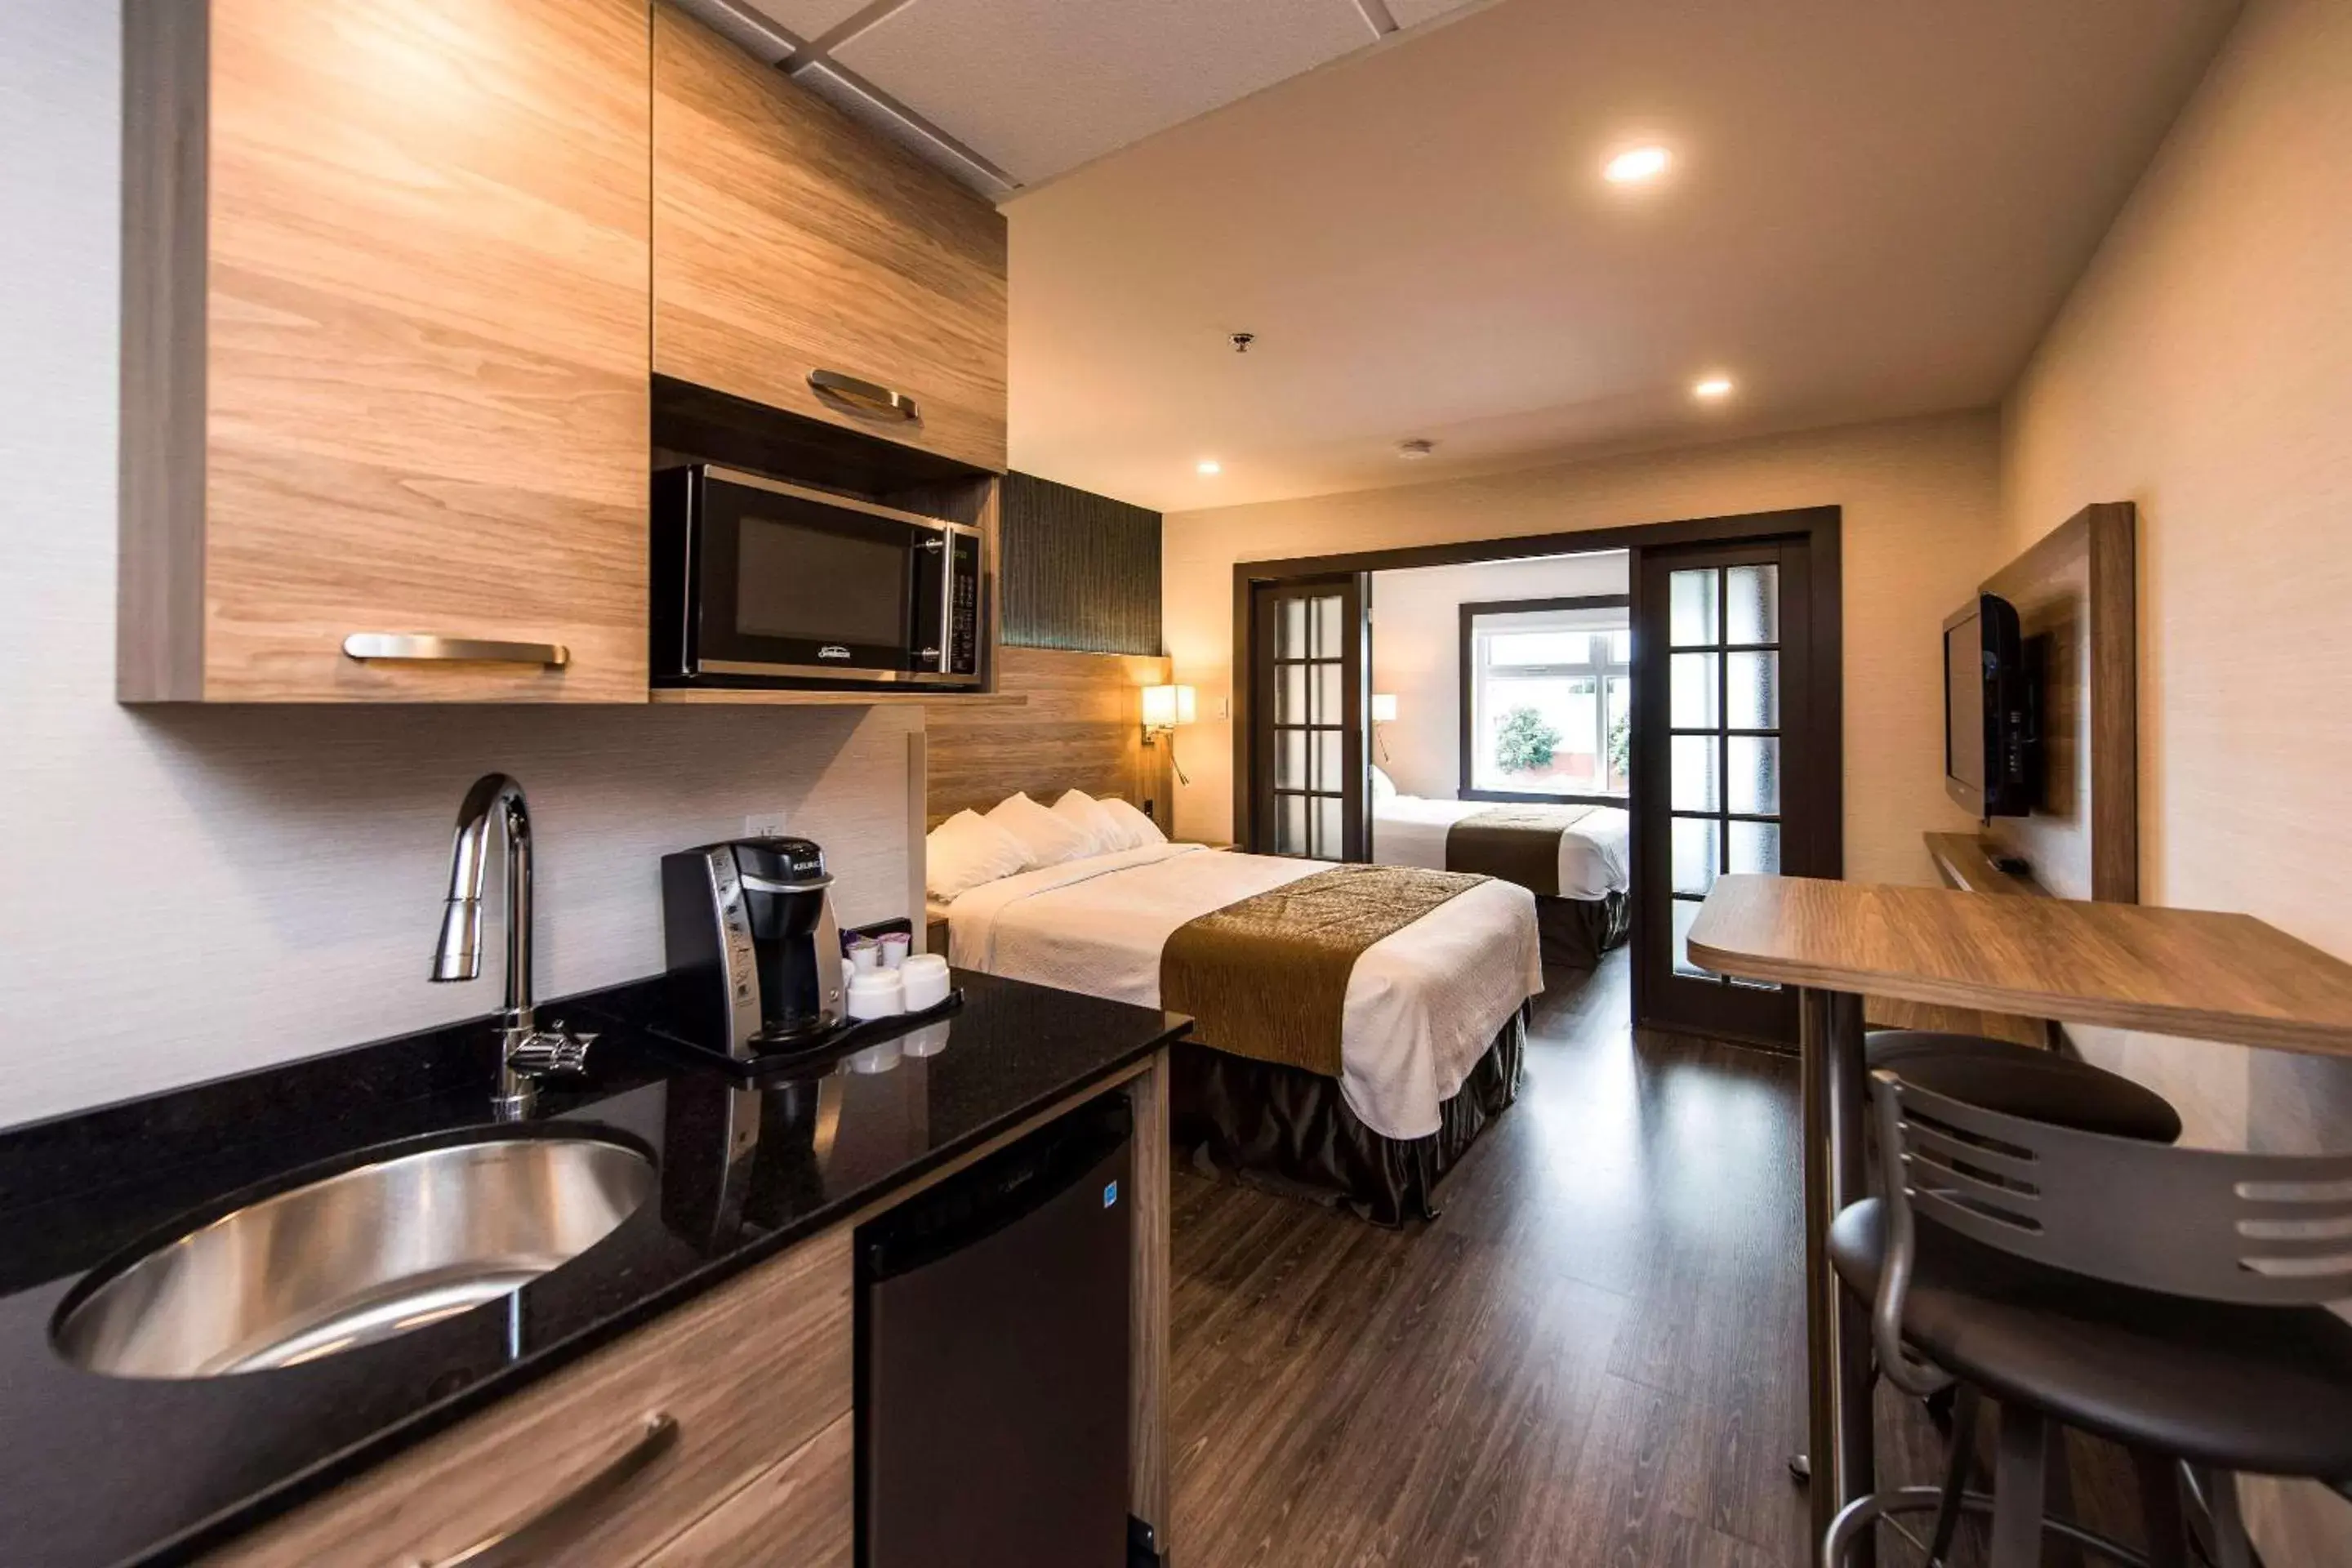 Bedroom in Hôtel Quality Suites Drummondville